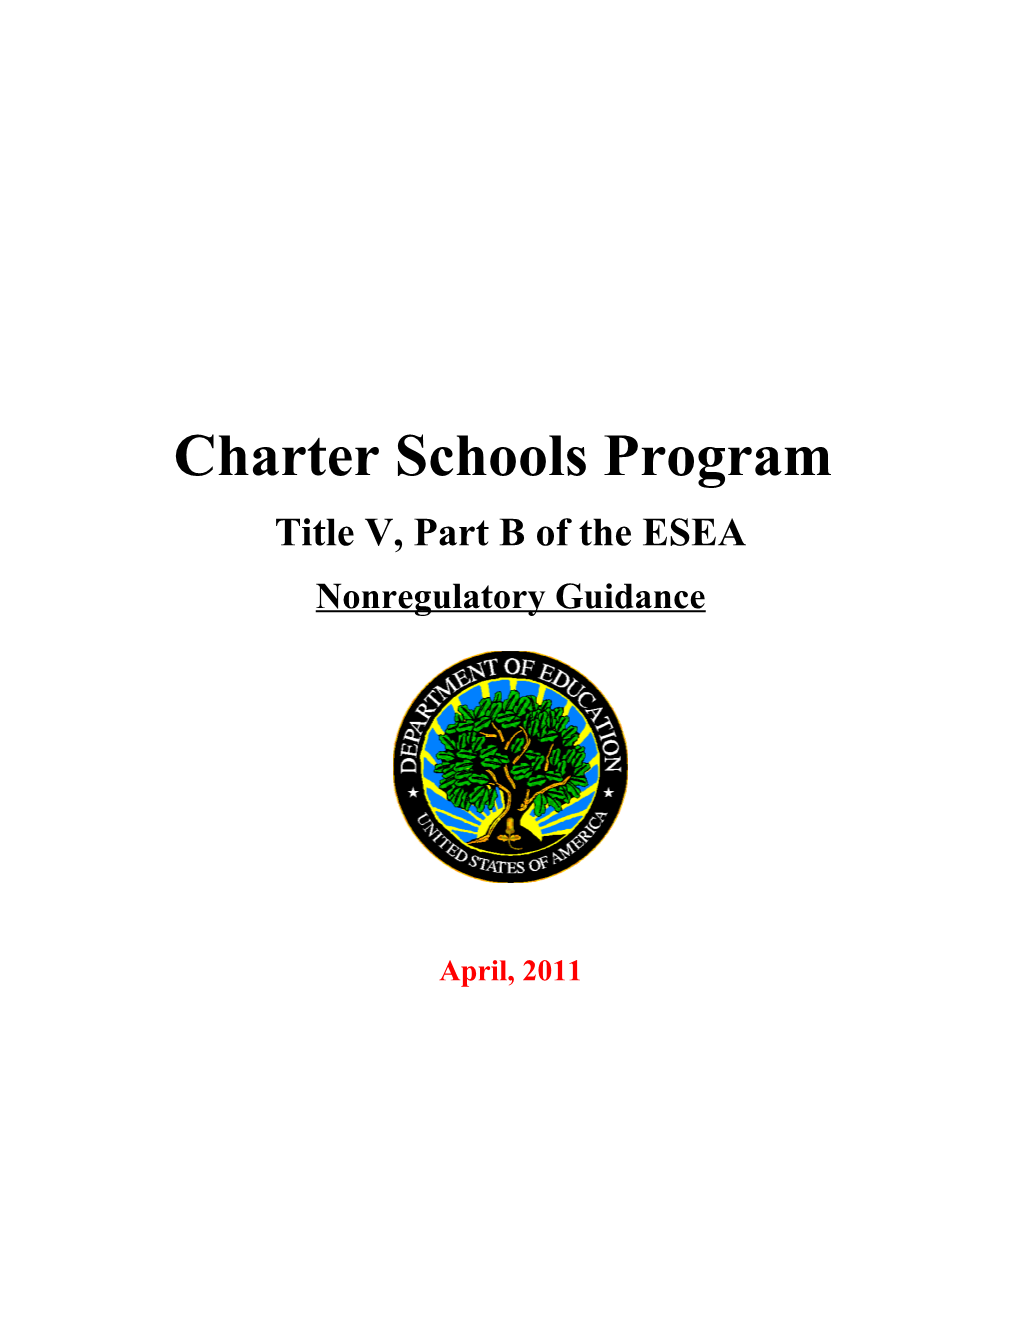 Charter Schools Program Nonregulatory Guidance (MS Word)